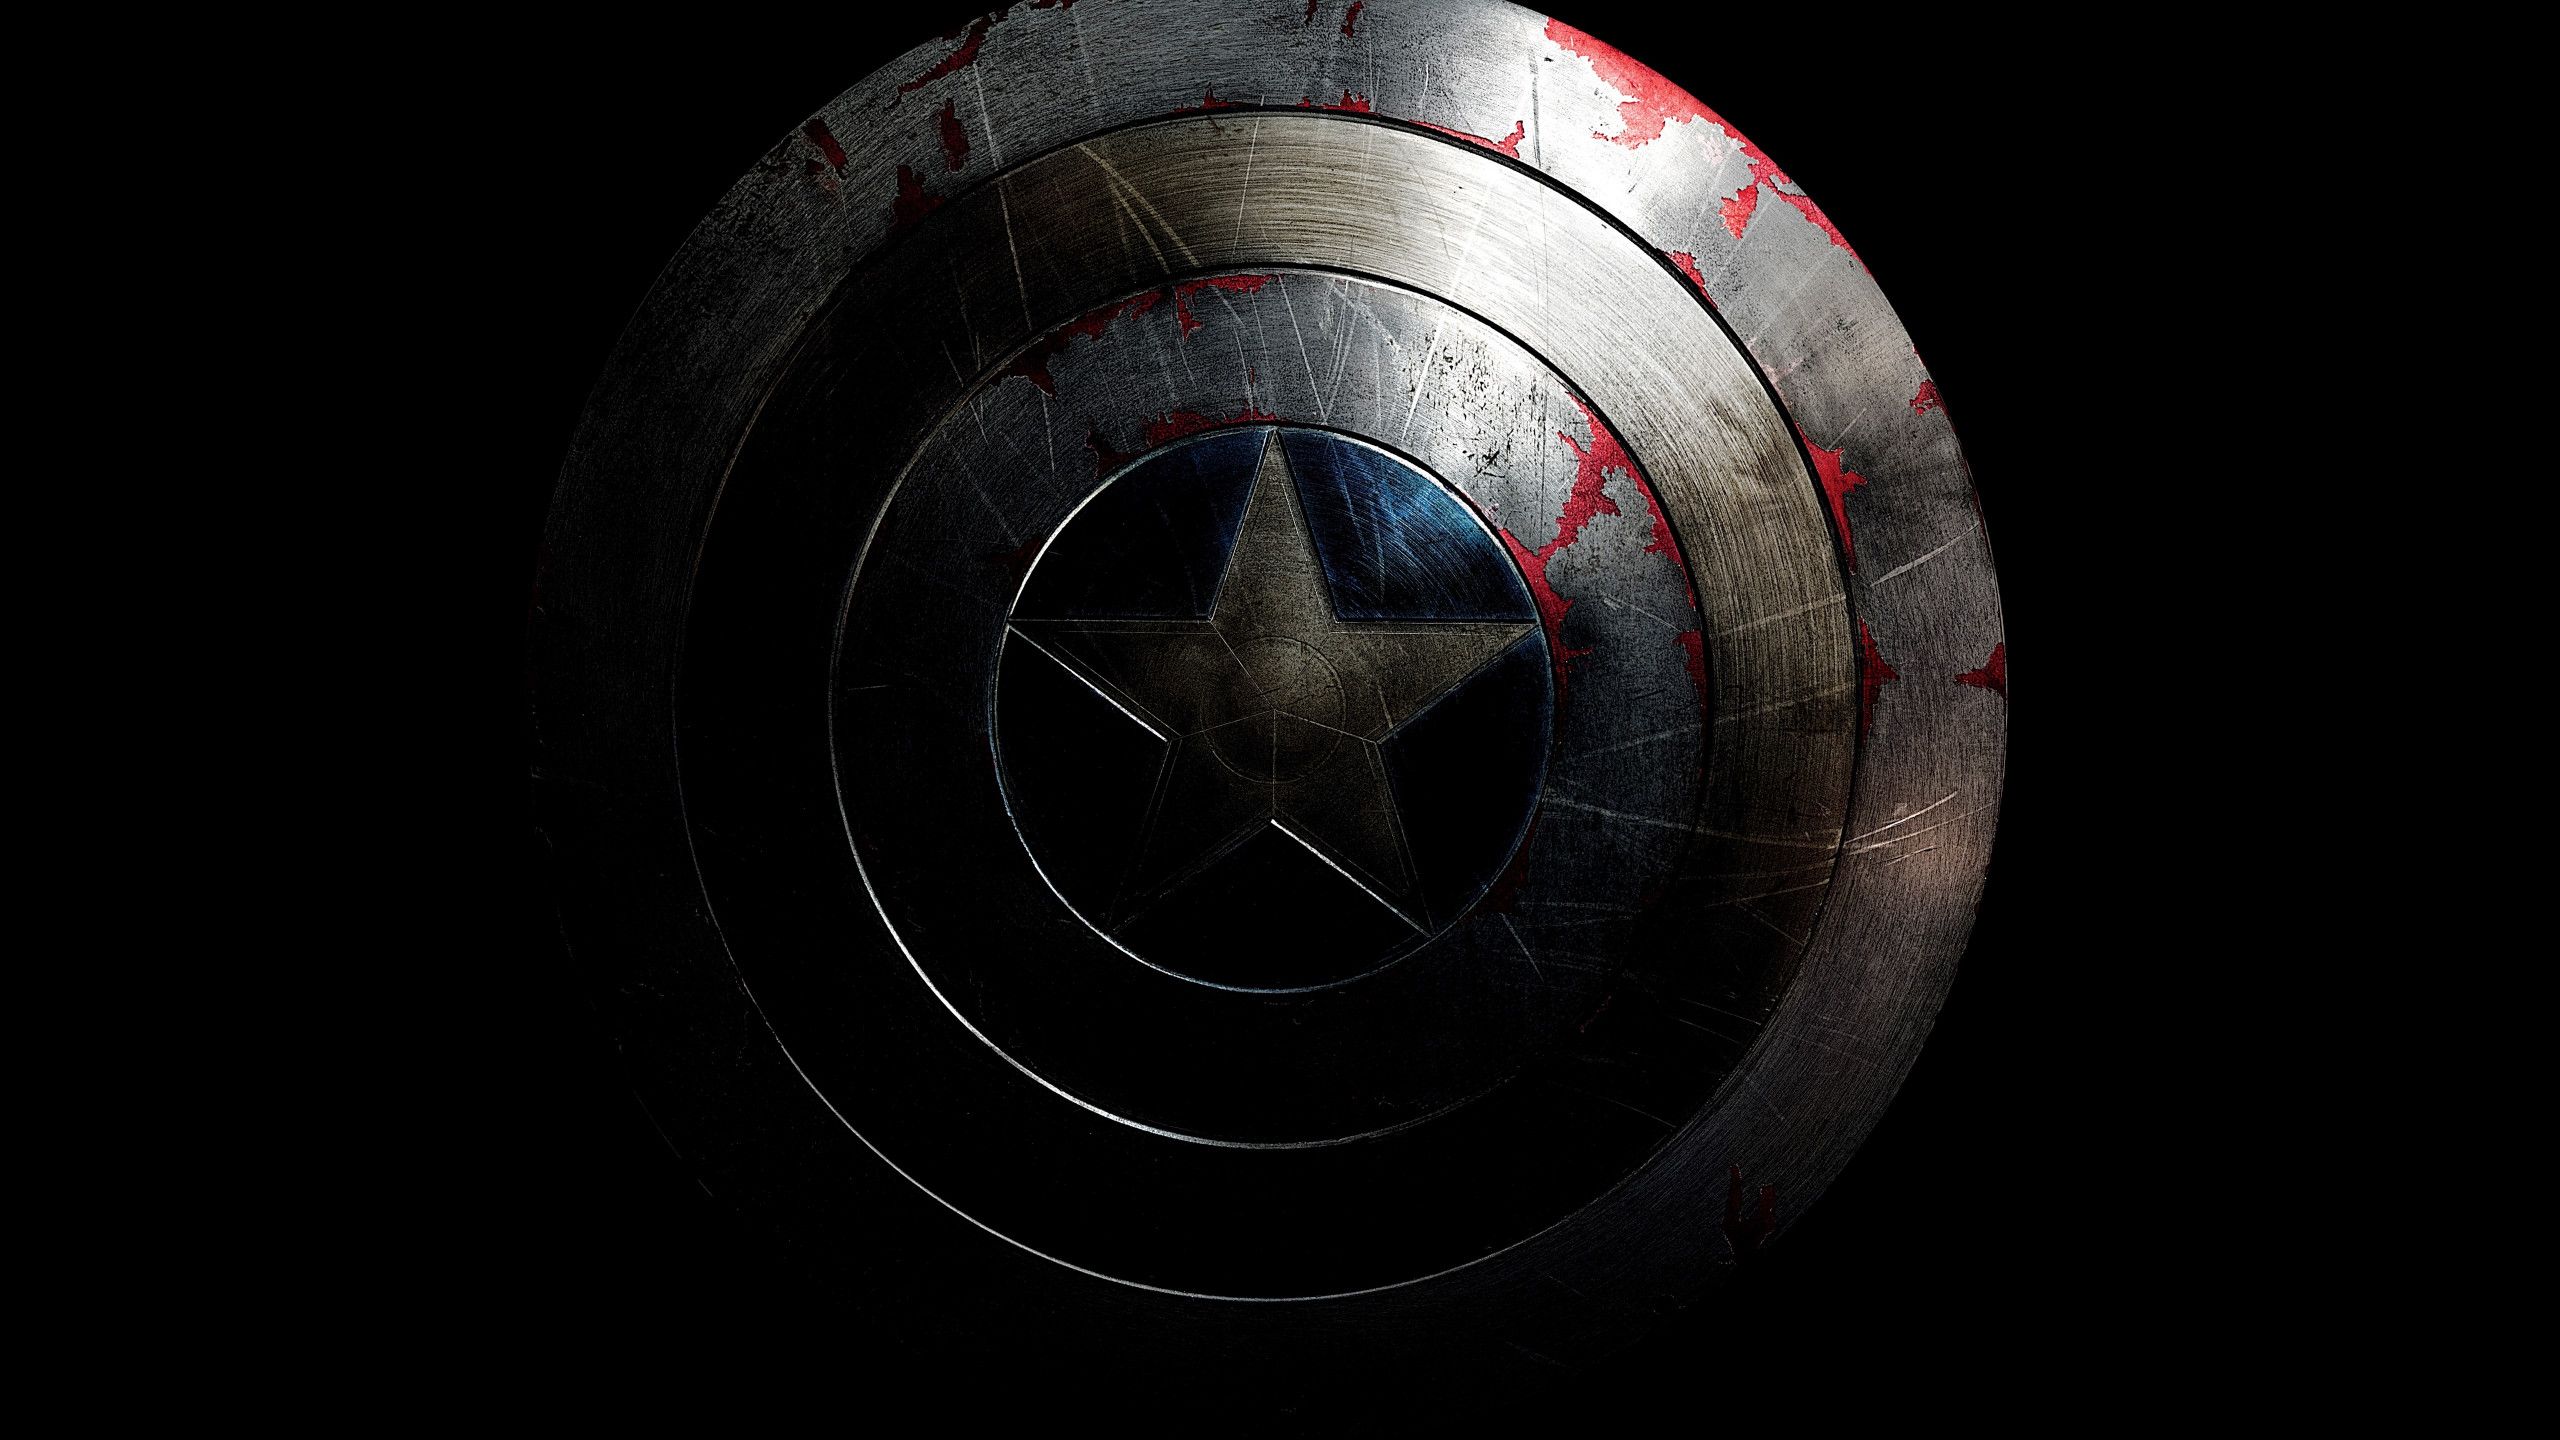 Download wallpaper: The shield of Captain America 2560x1440